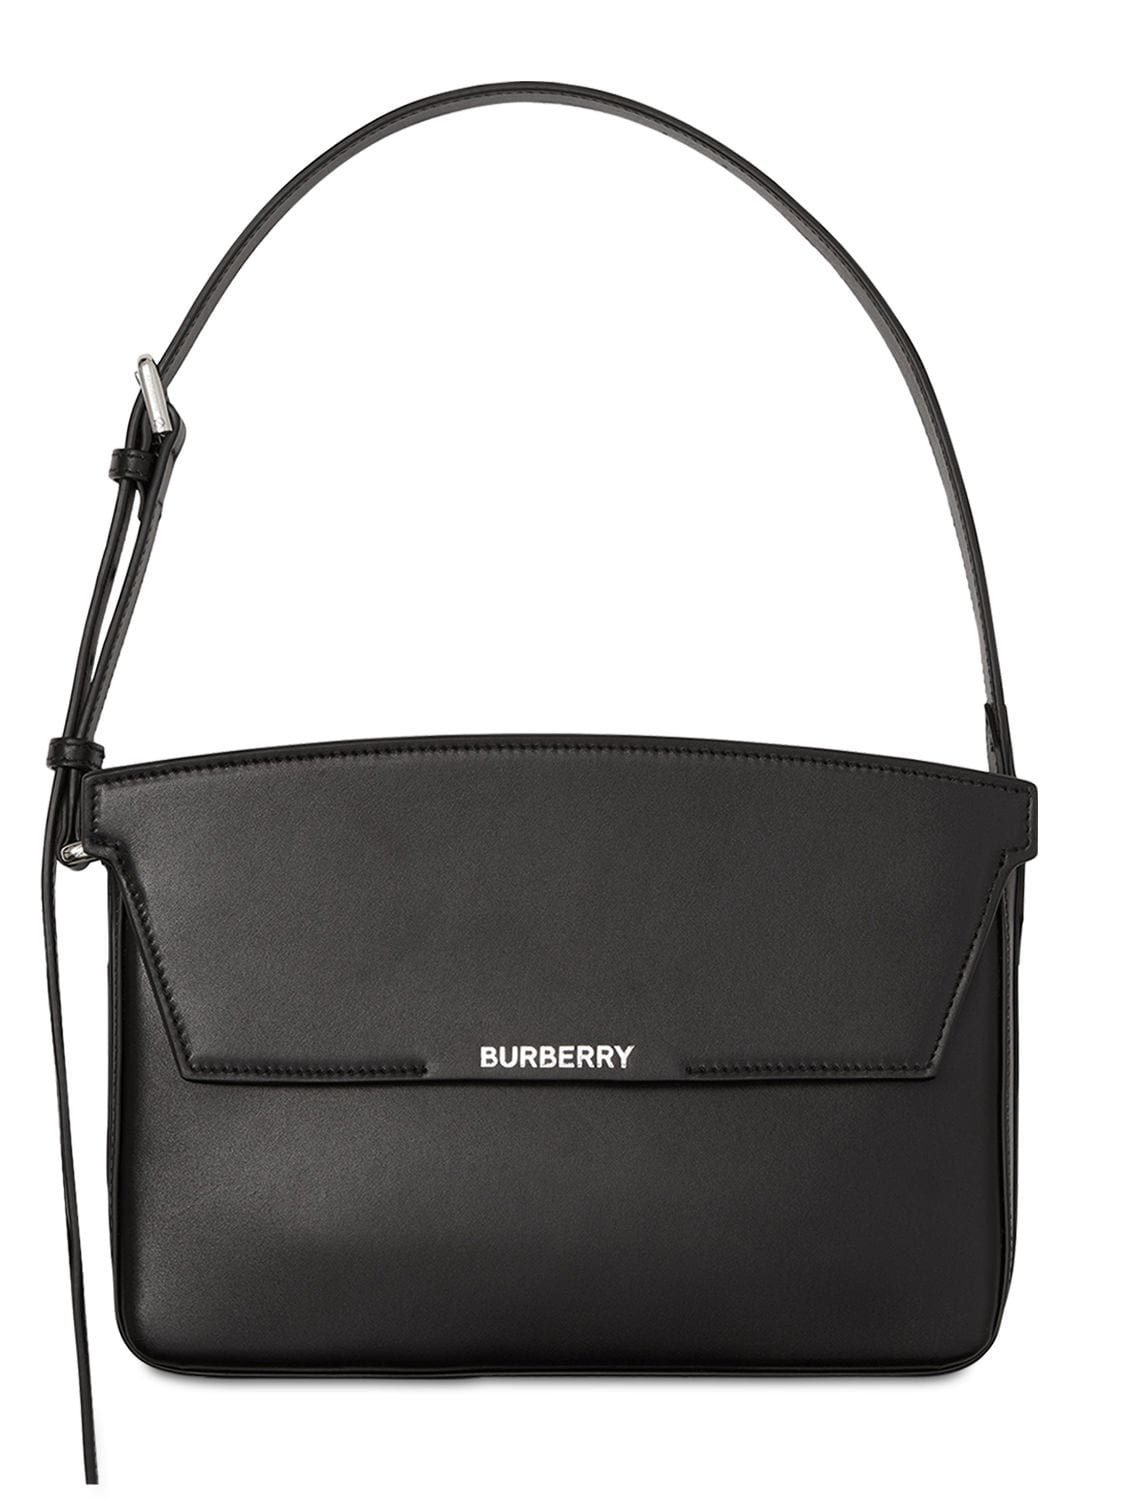 BURBERRY Catherine Grain Leather Shoulder Bag